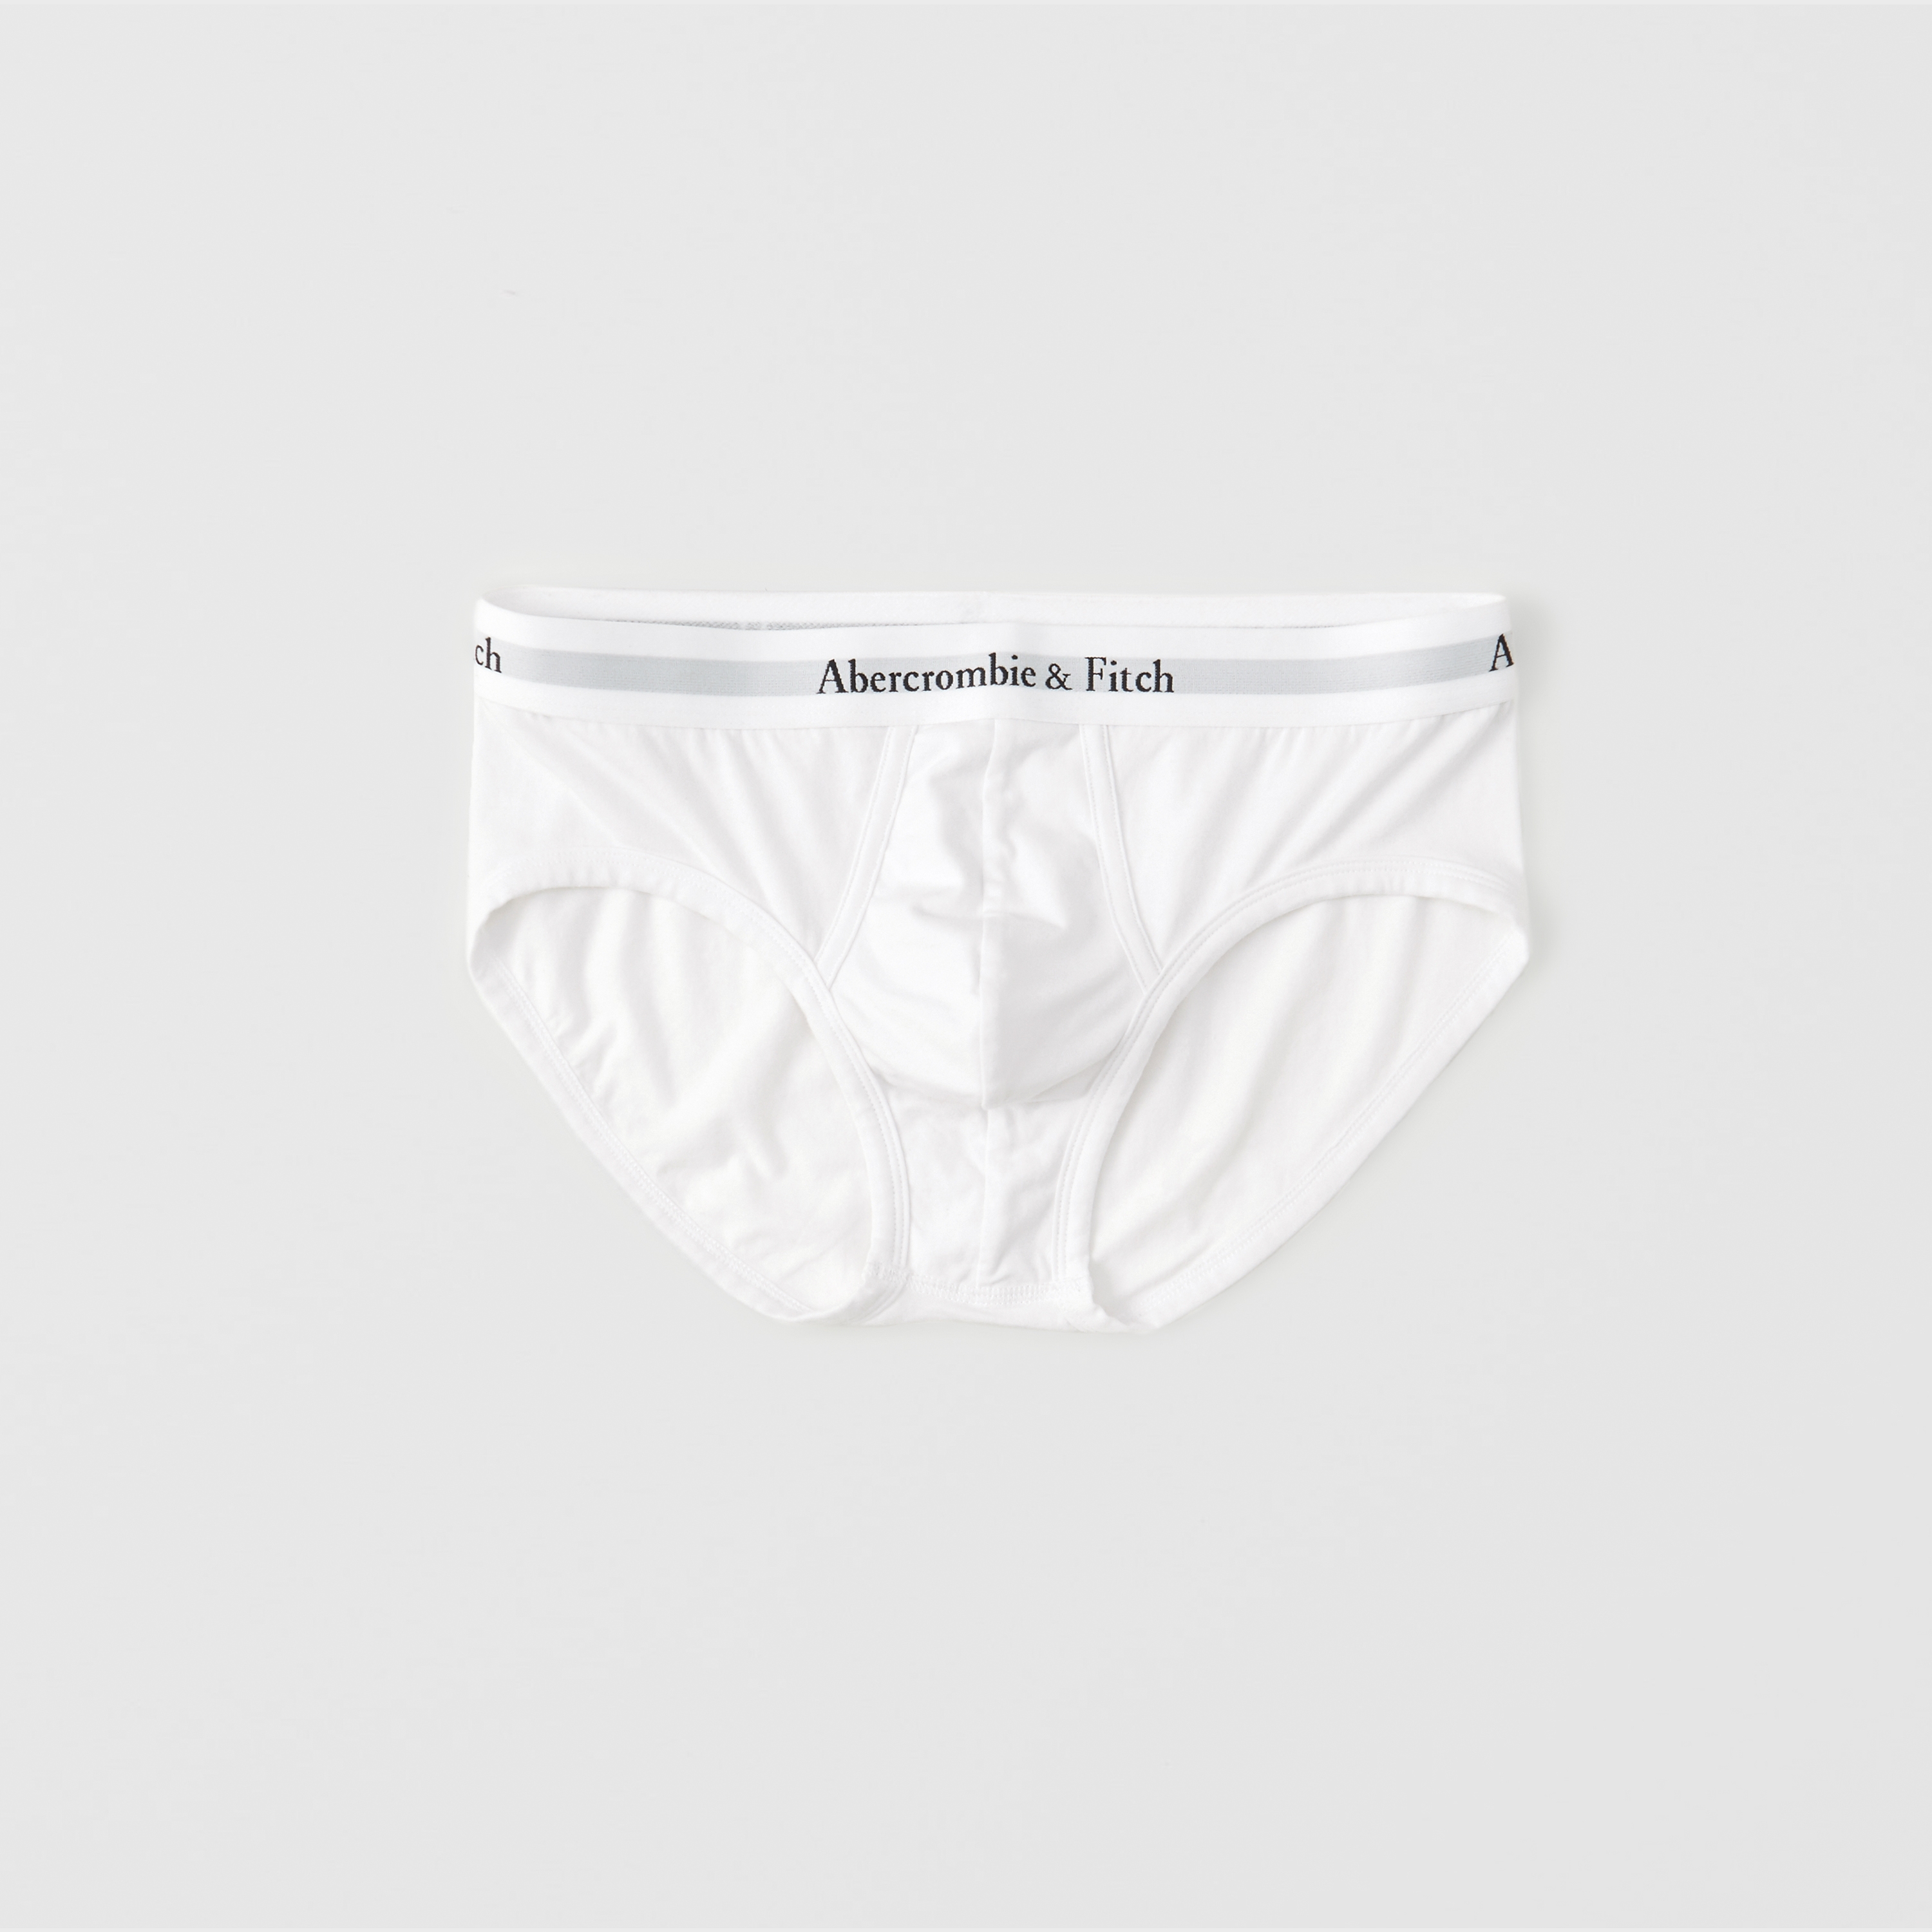 abercrombie fitch underwear womens